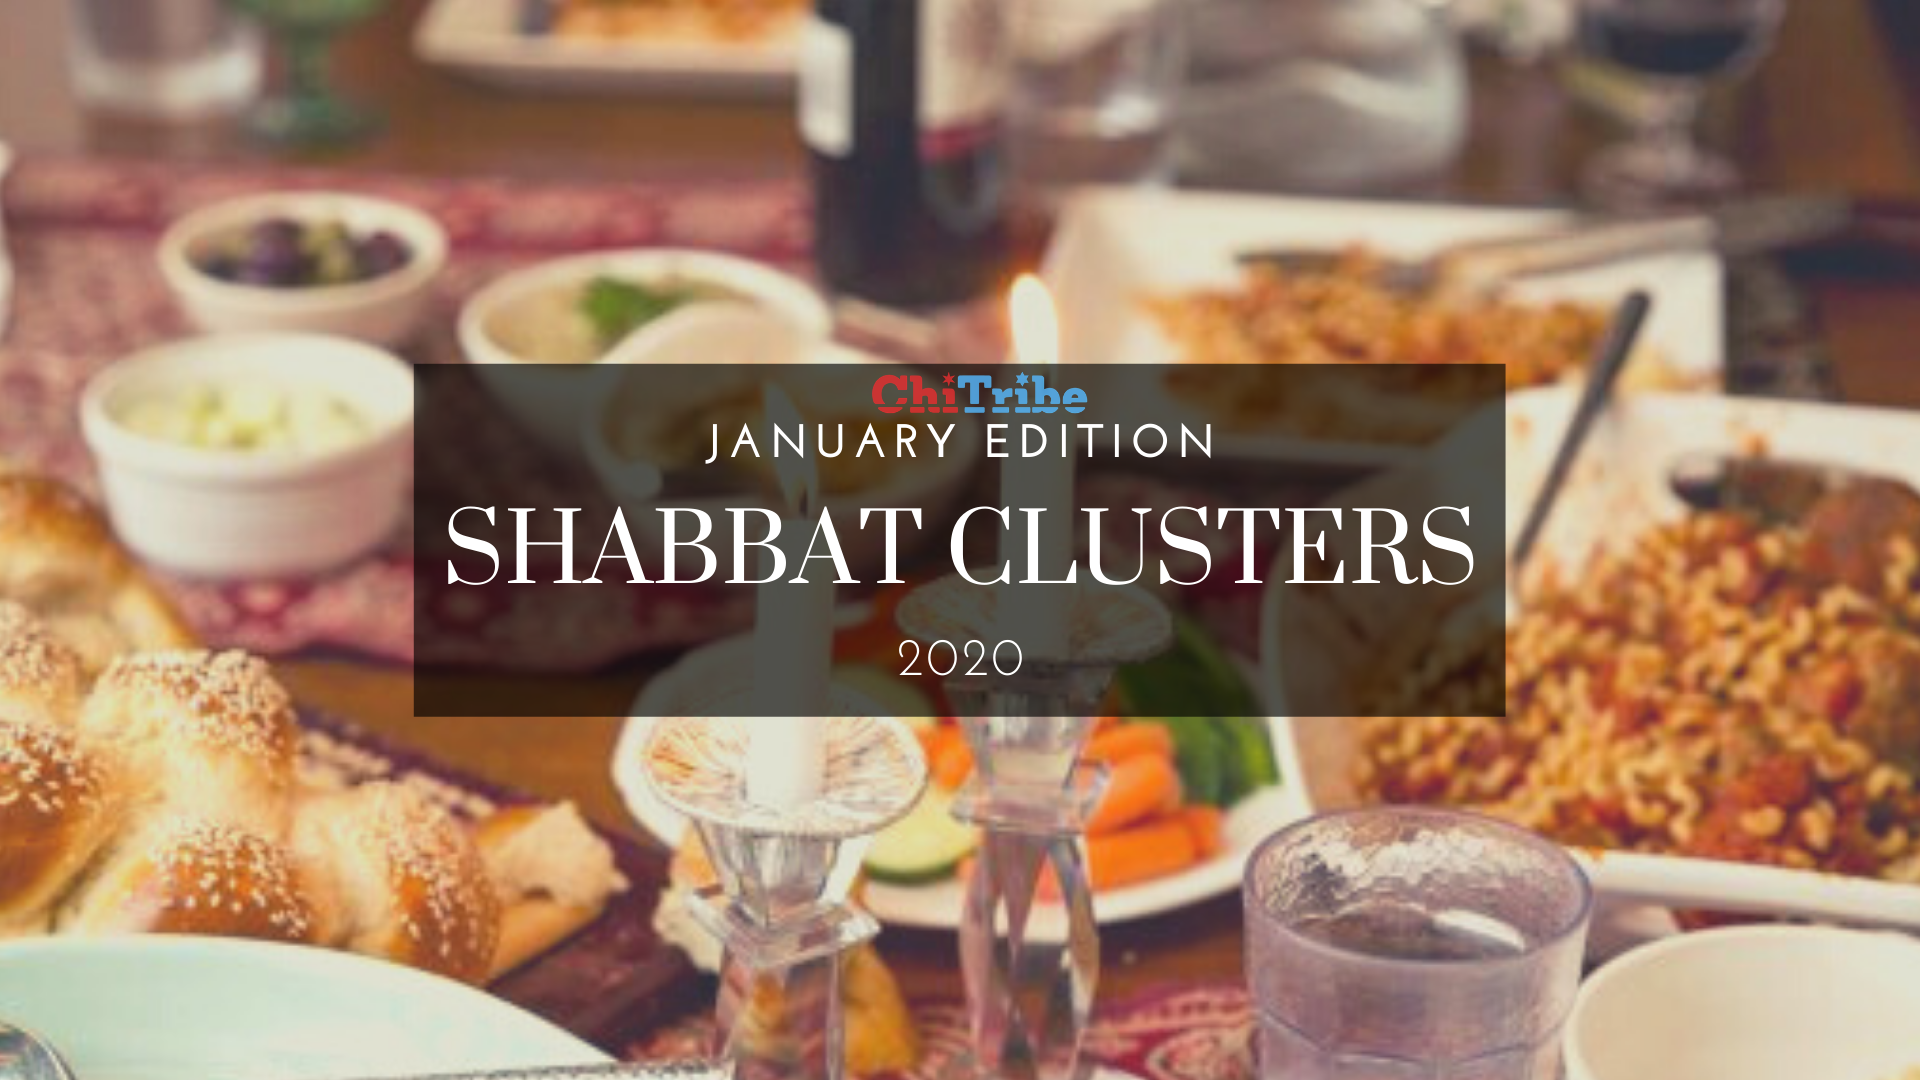 shabbat clusters january edition chitribe